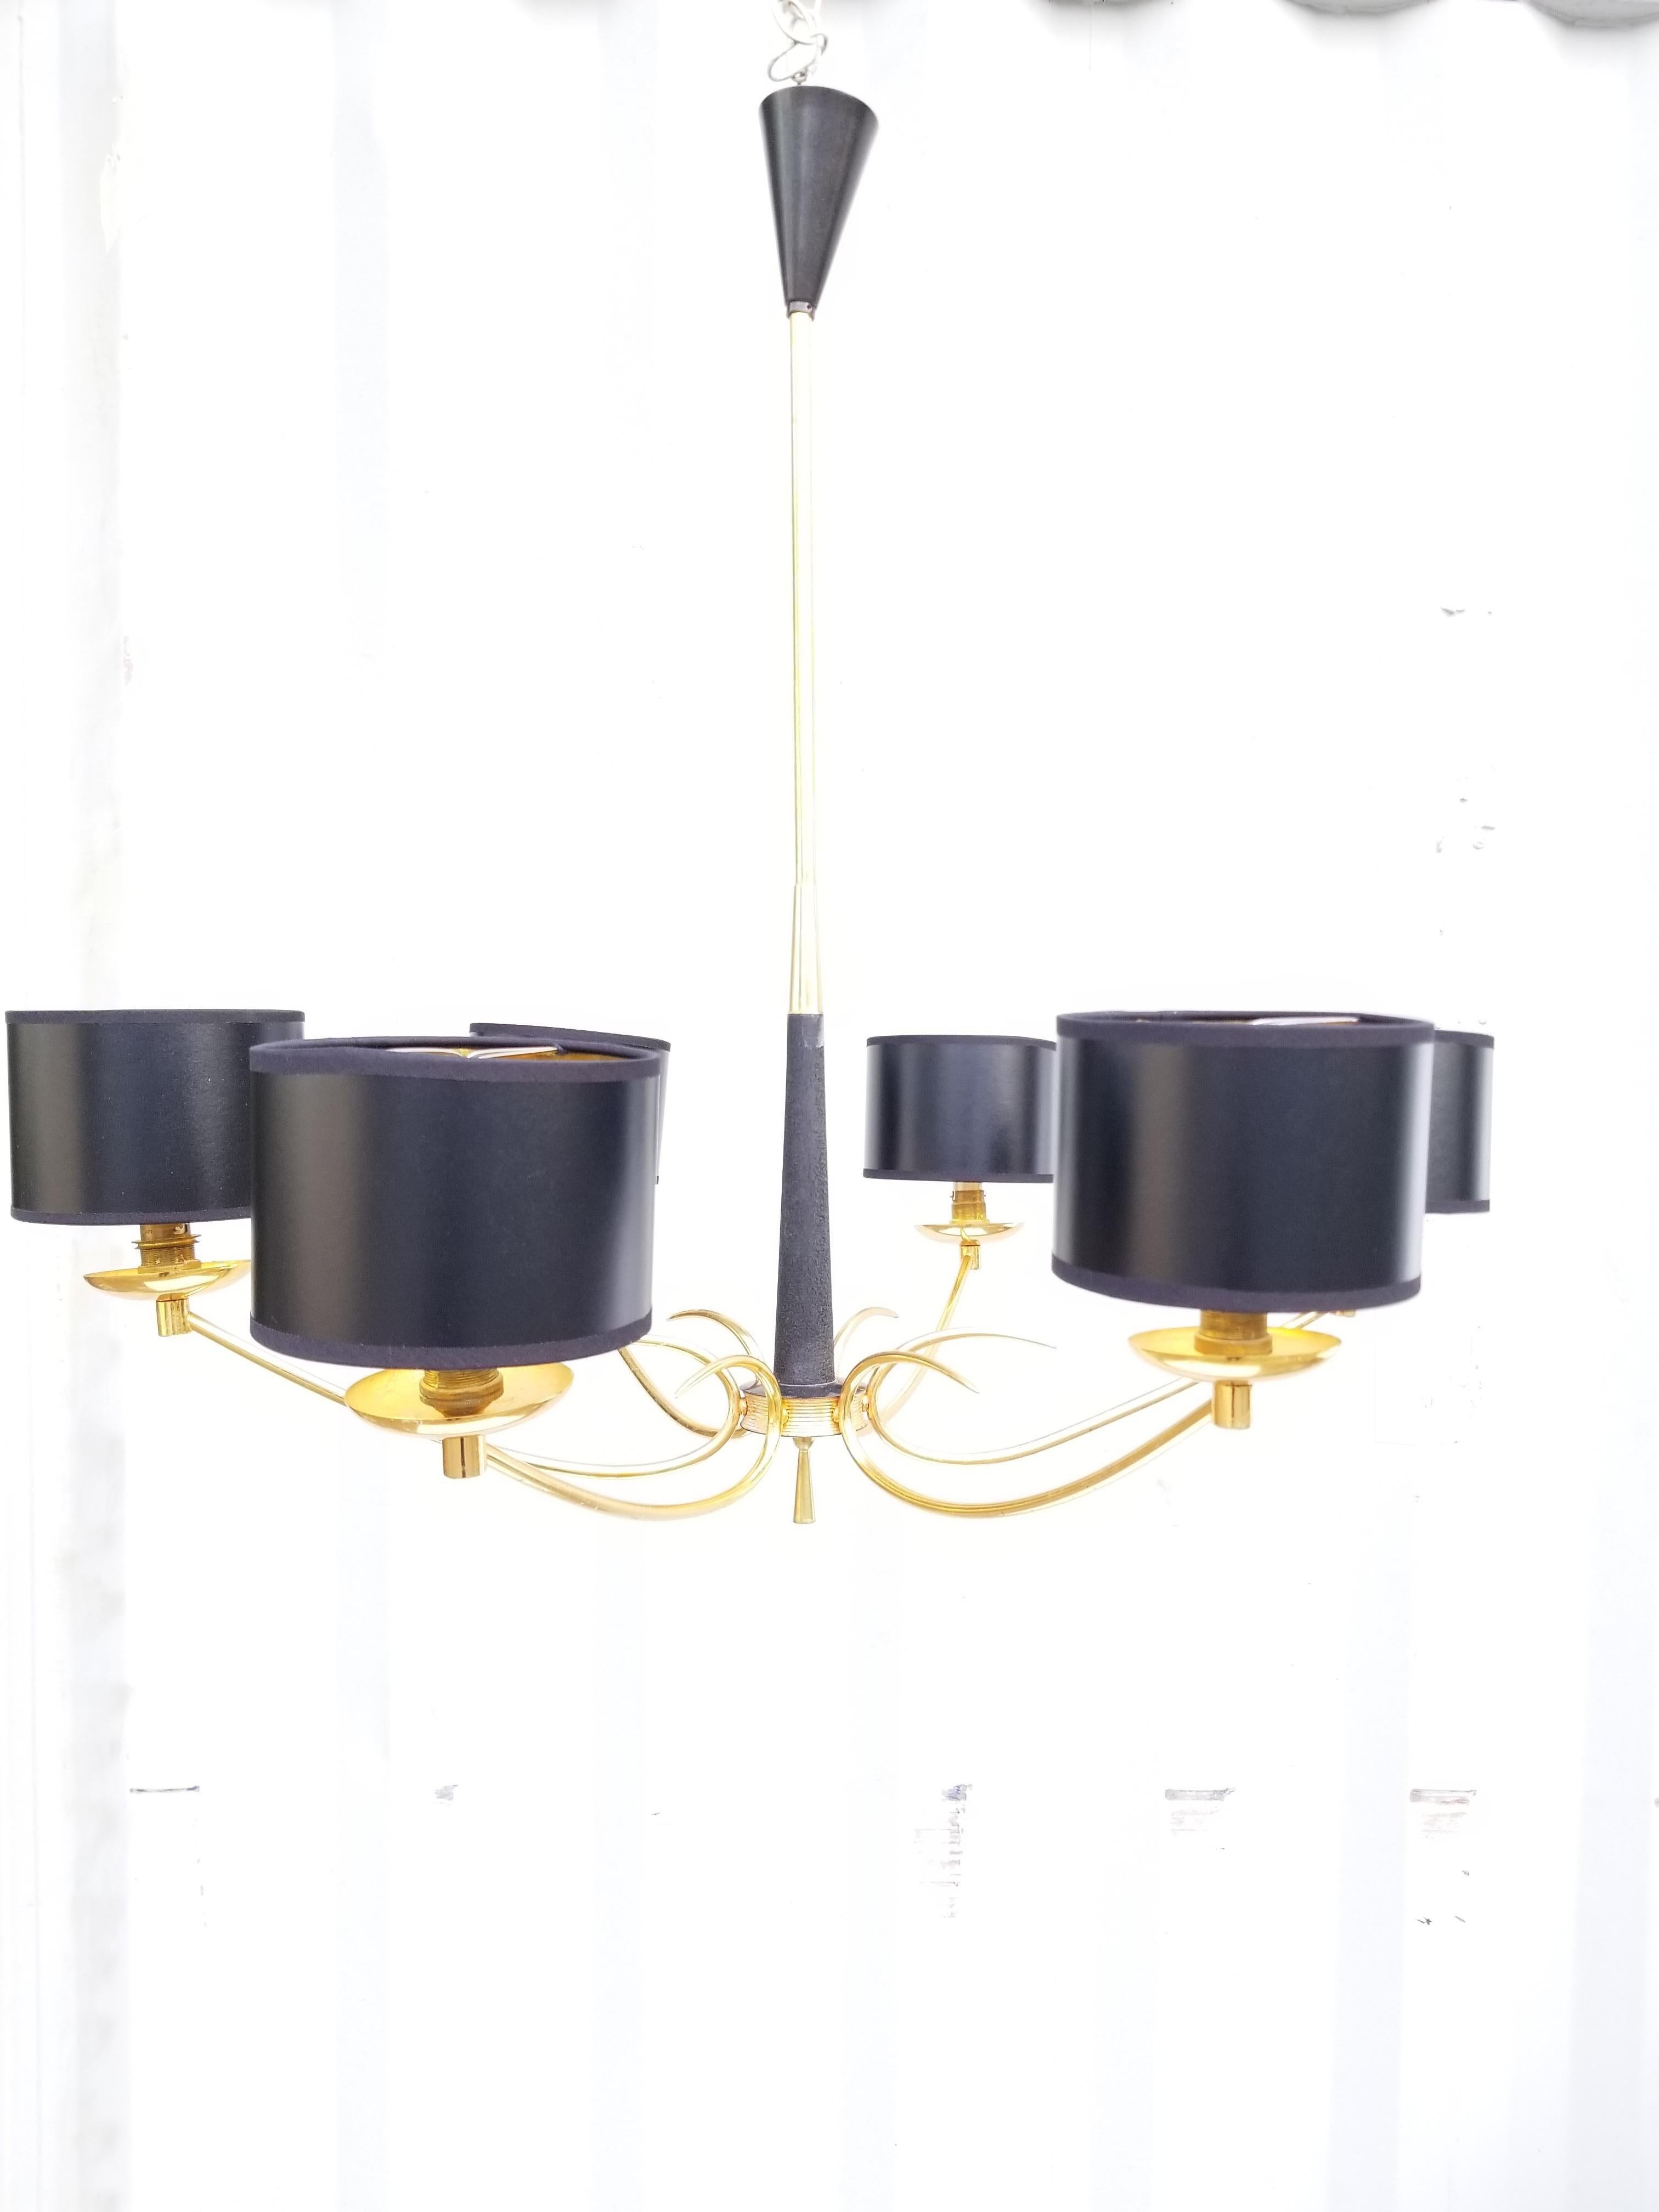 Stilnovo style 6 light chandelier, 2 tone brass and black finish.
40 watts max bulb.
 